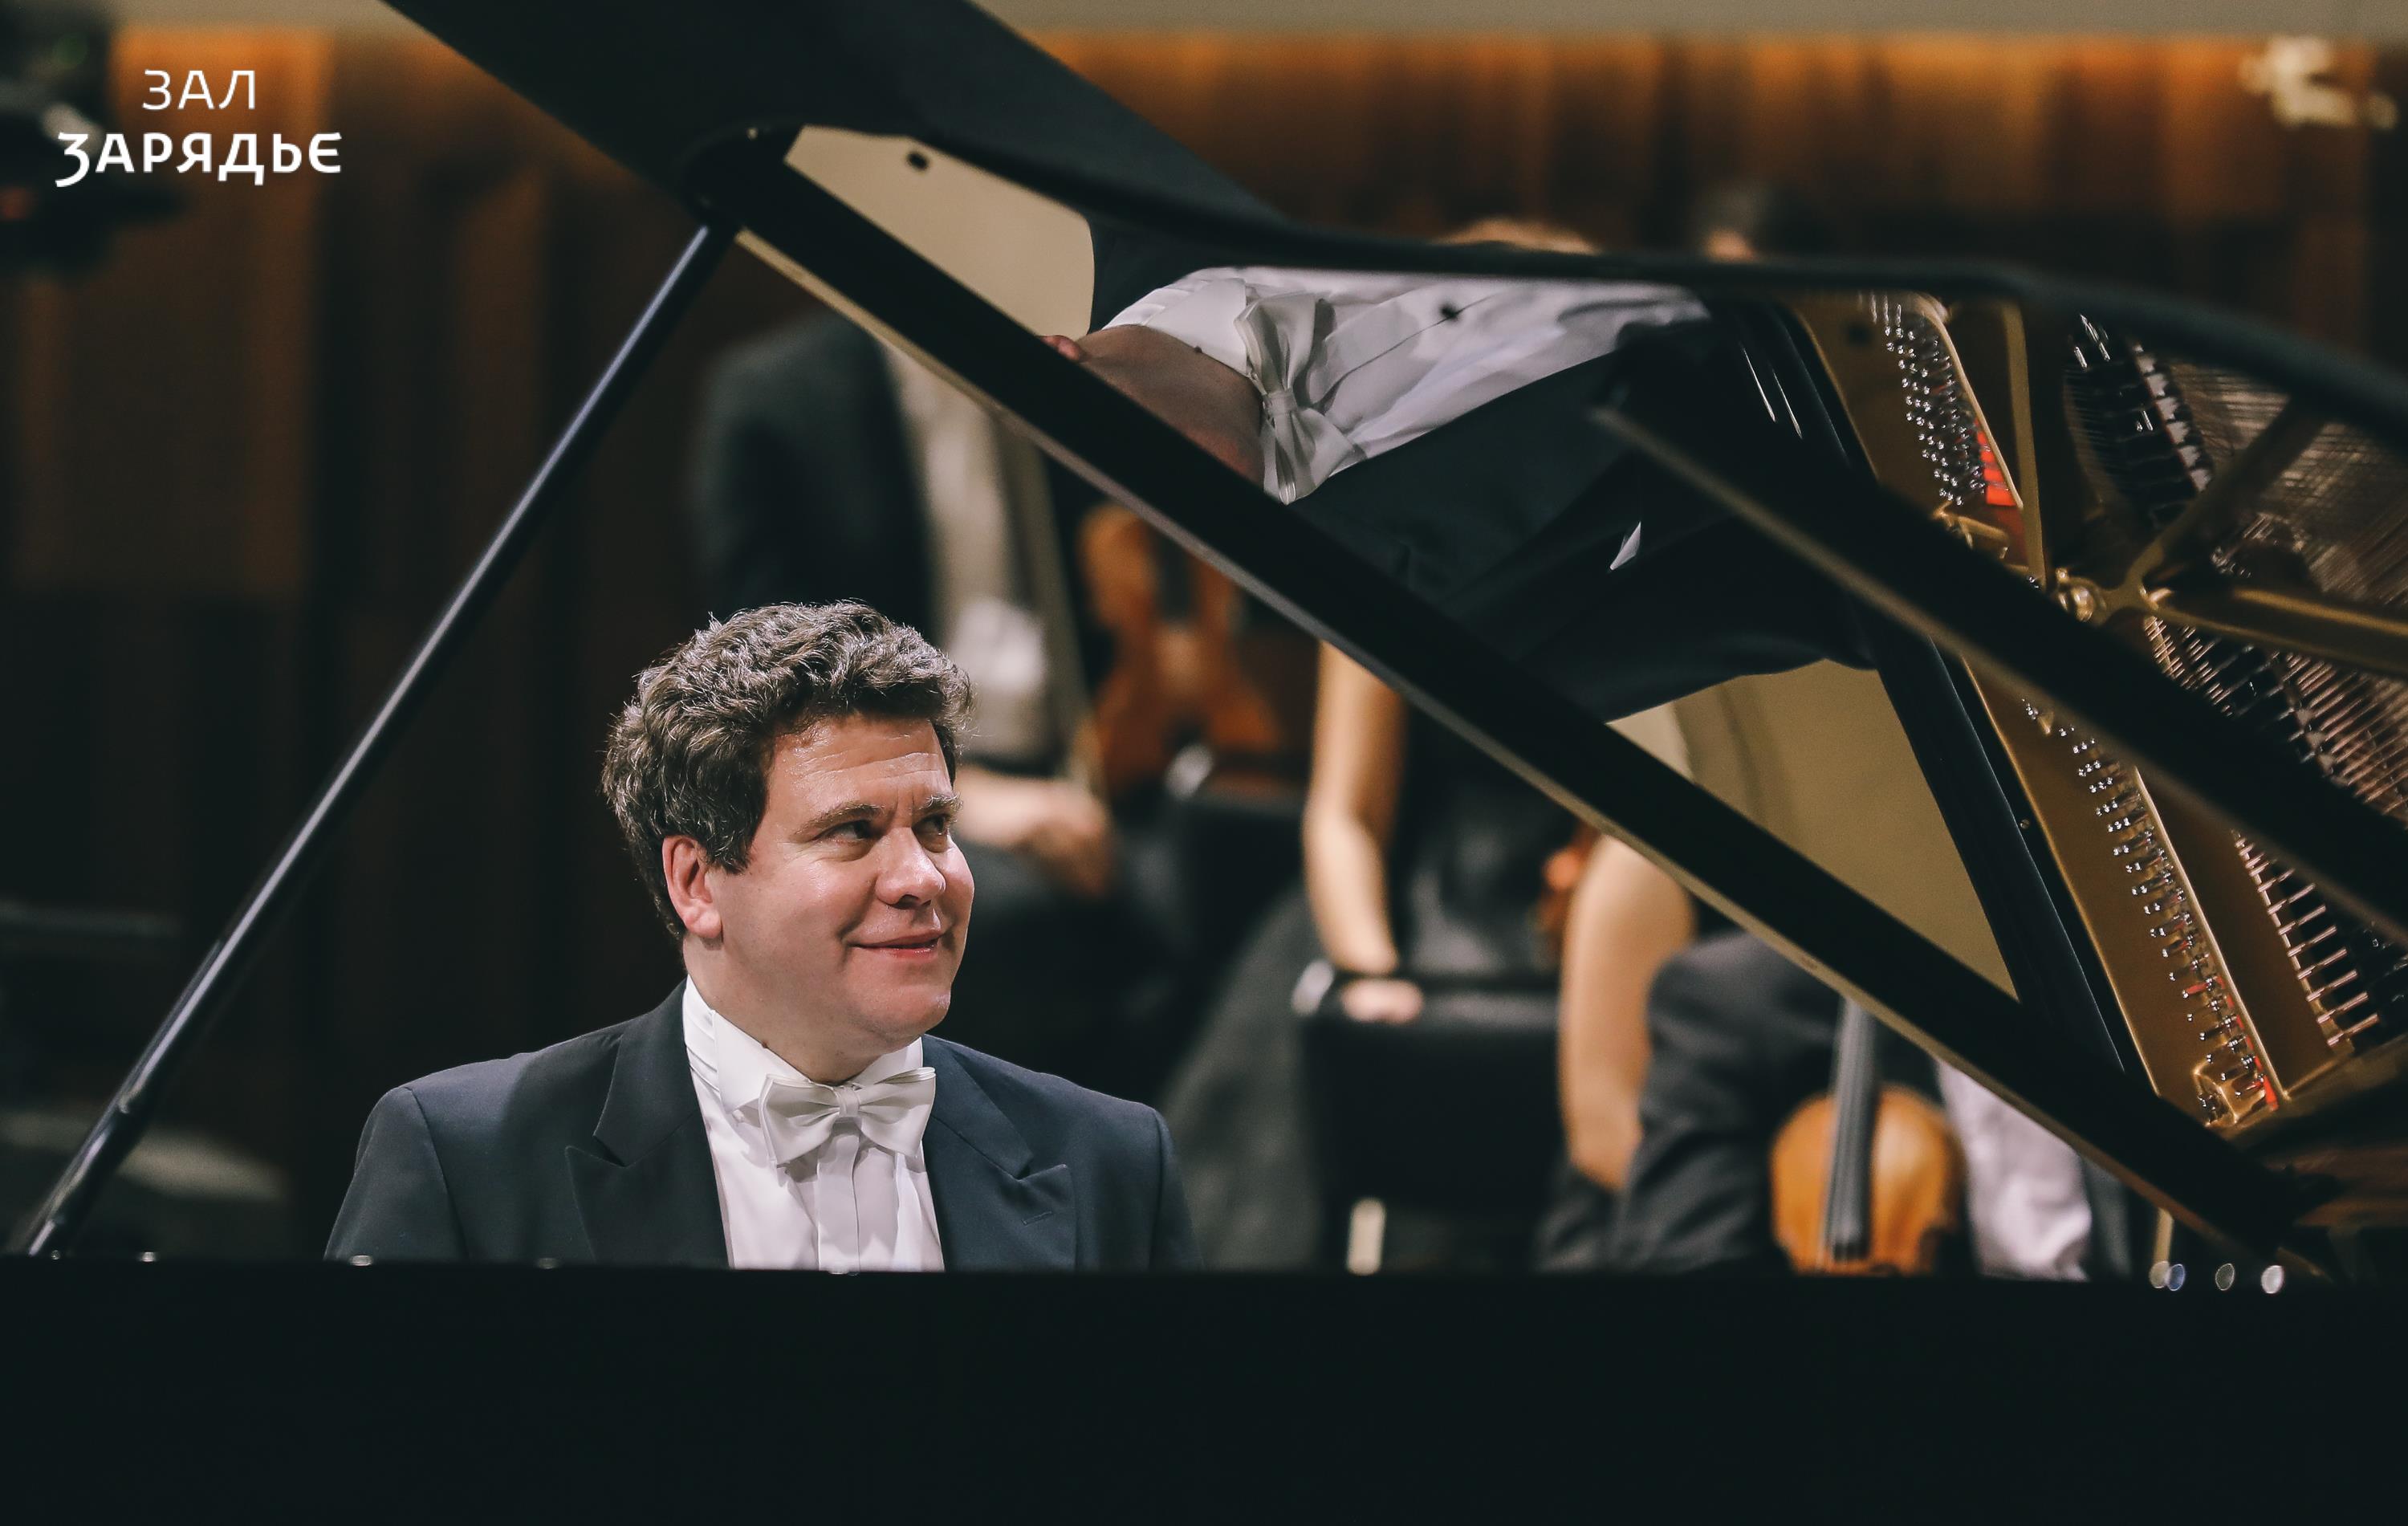 Classical and jazz Denis Matsuev, piano 